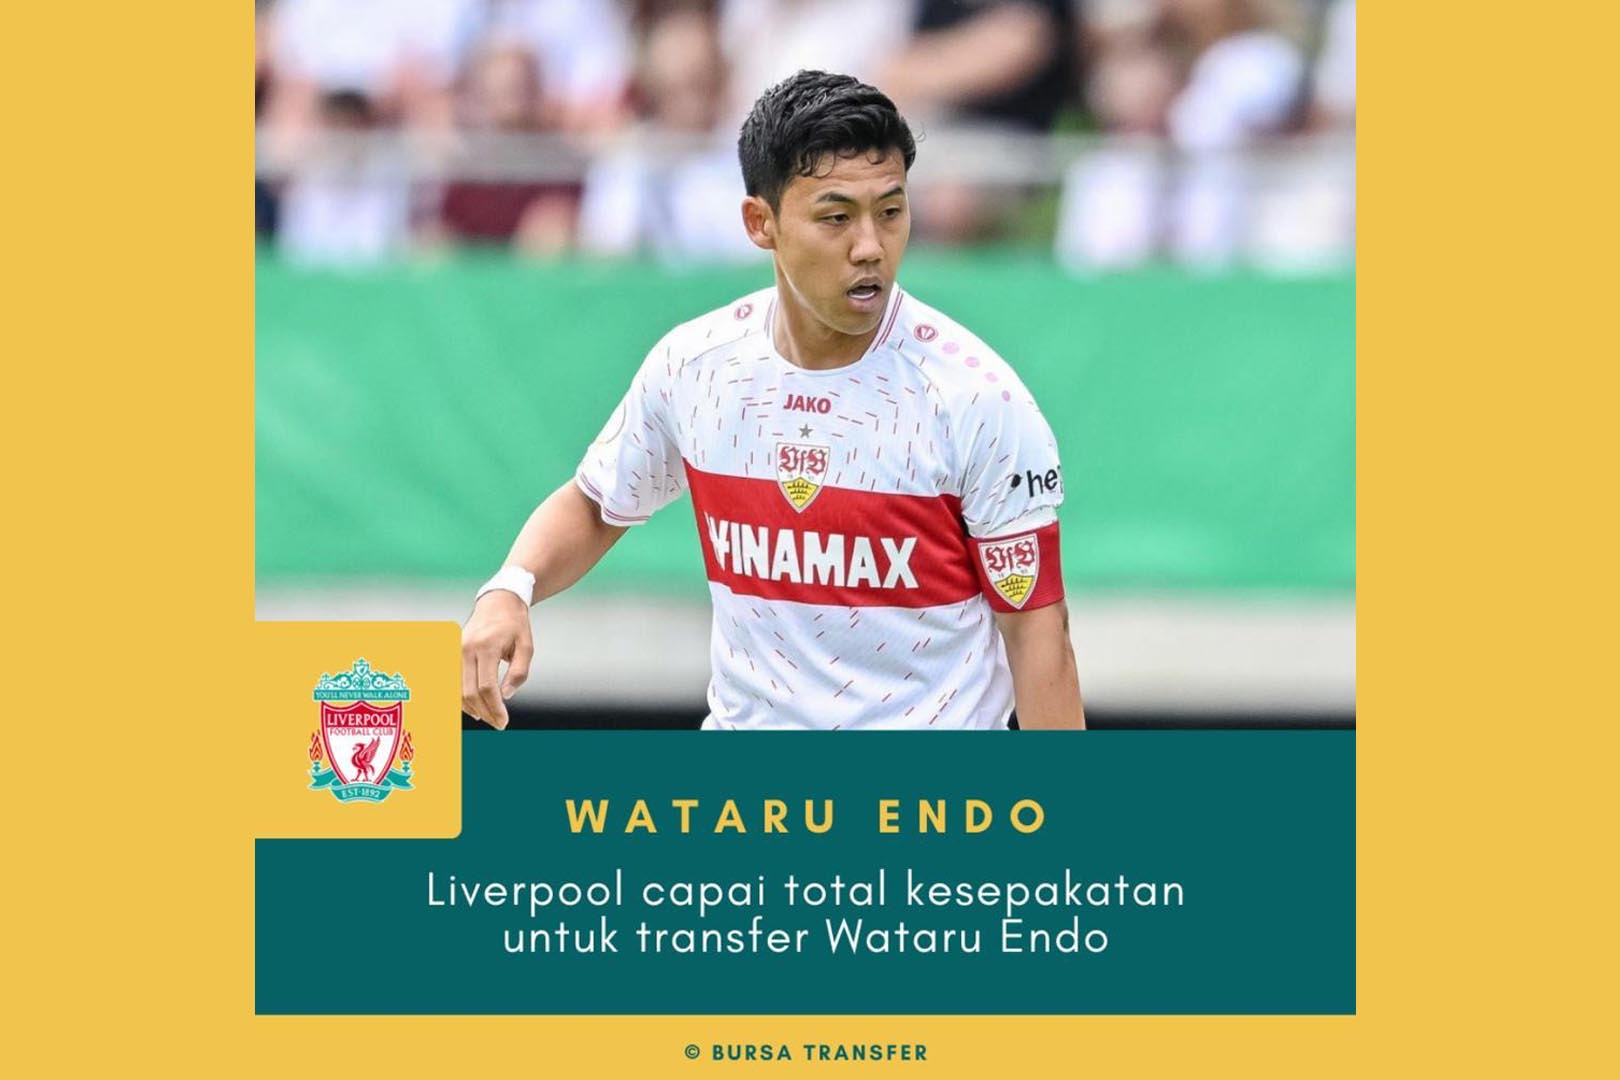 Liverpool Boyong Gelandang Baru Dari Jepang Wataru Endo Dengan Harga Murah!